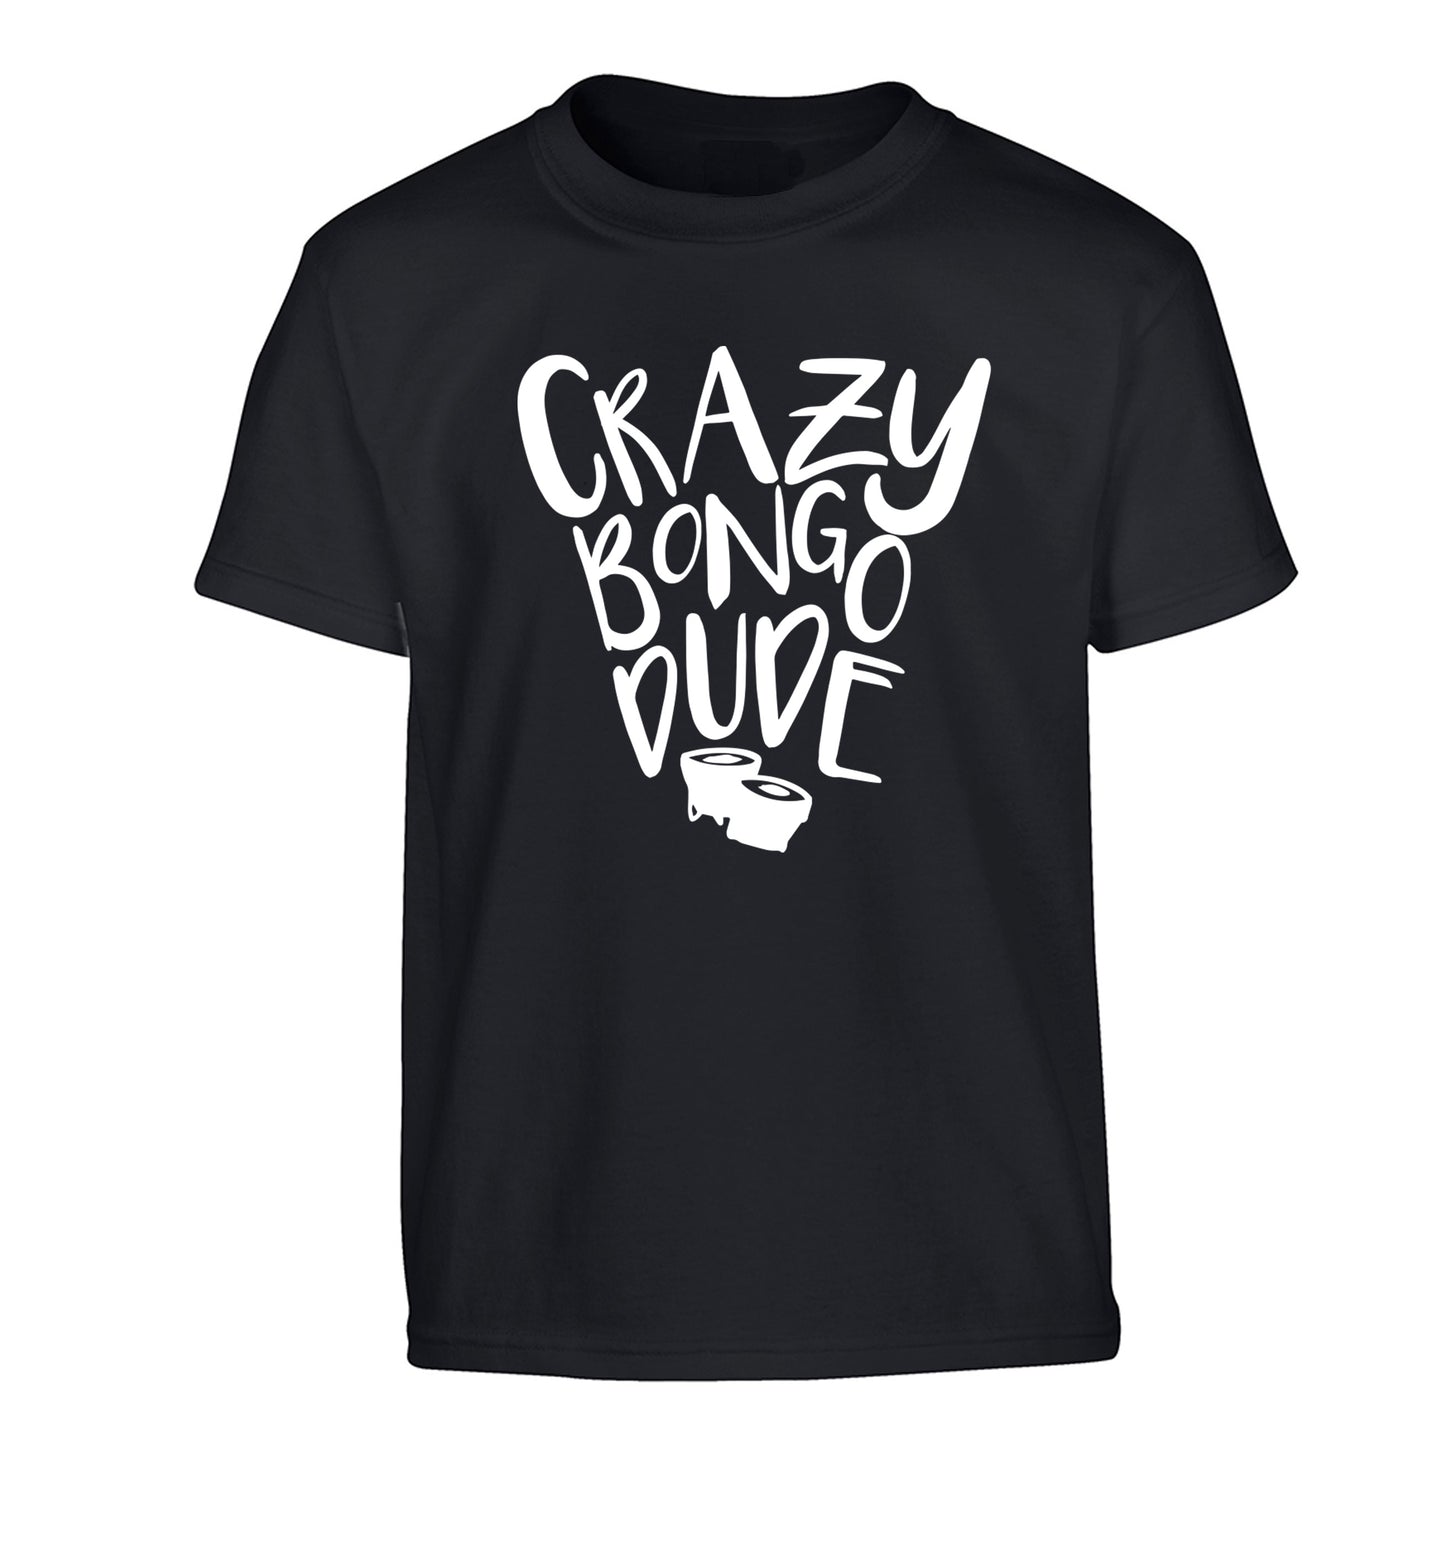 Crazy bongo dude Children's black Tshirt 12-14 Years